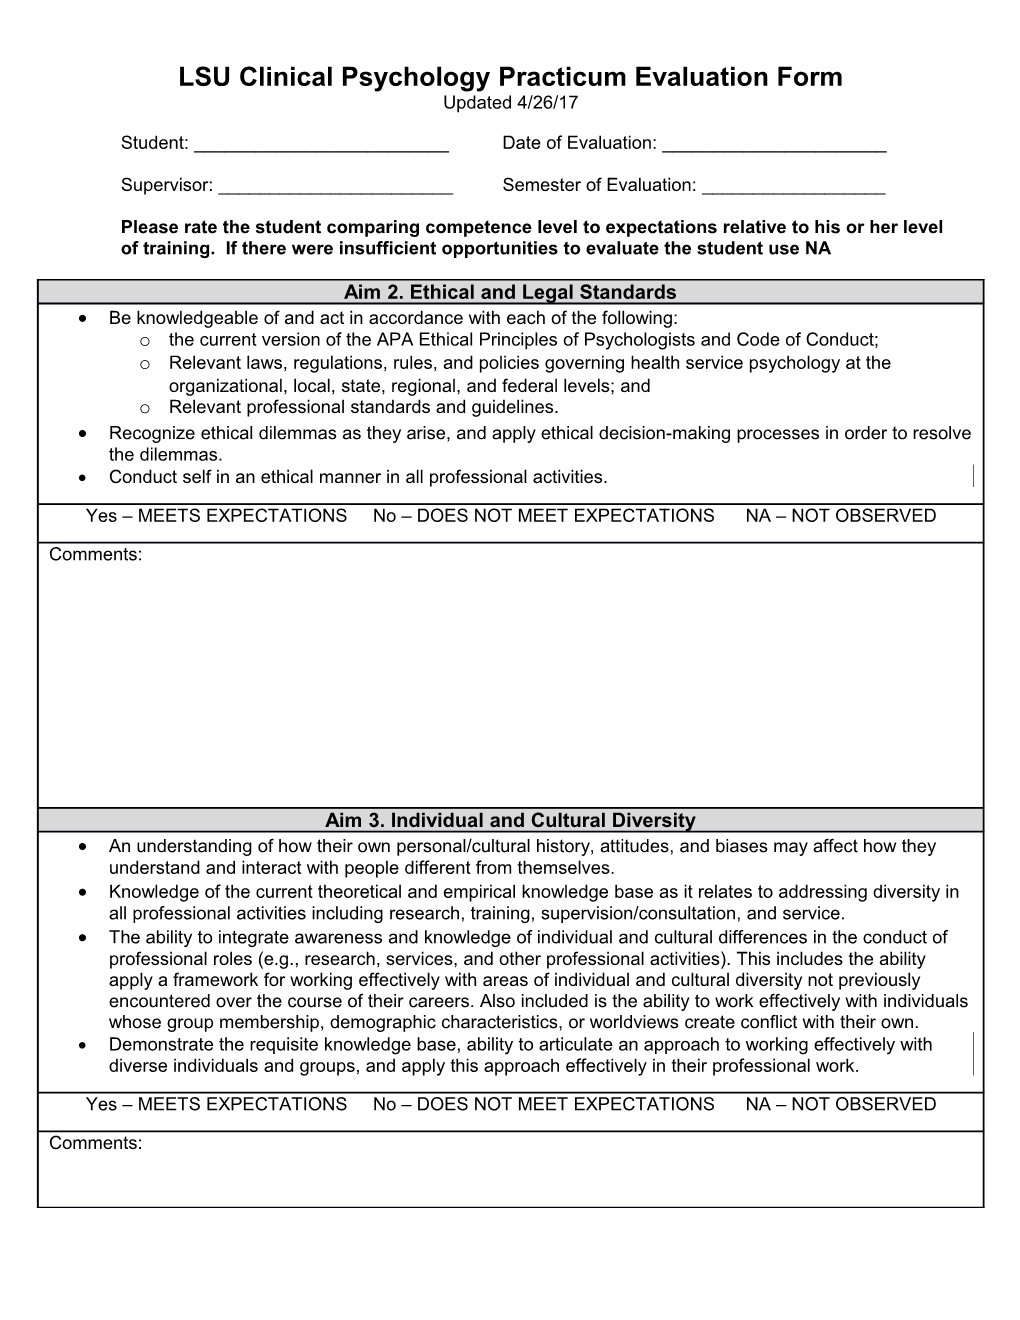 LSU Clinical Psychology Practicum Evaluation Form